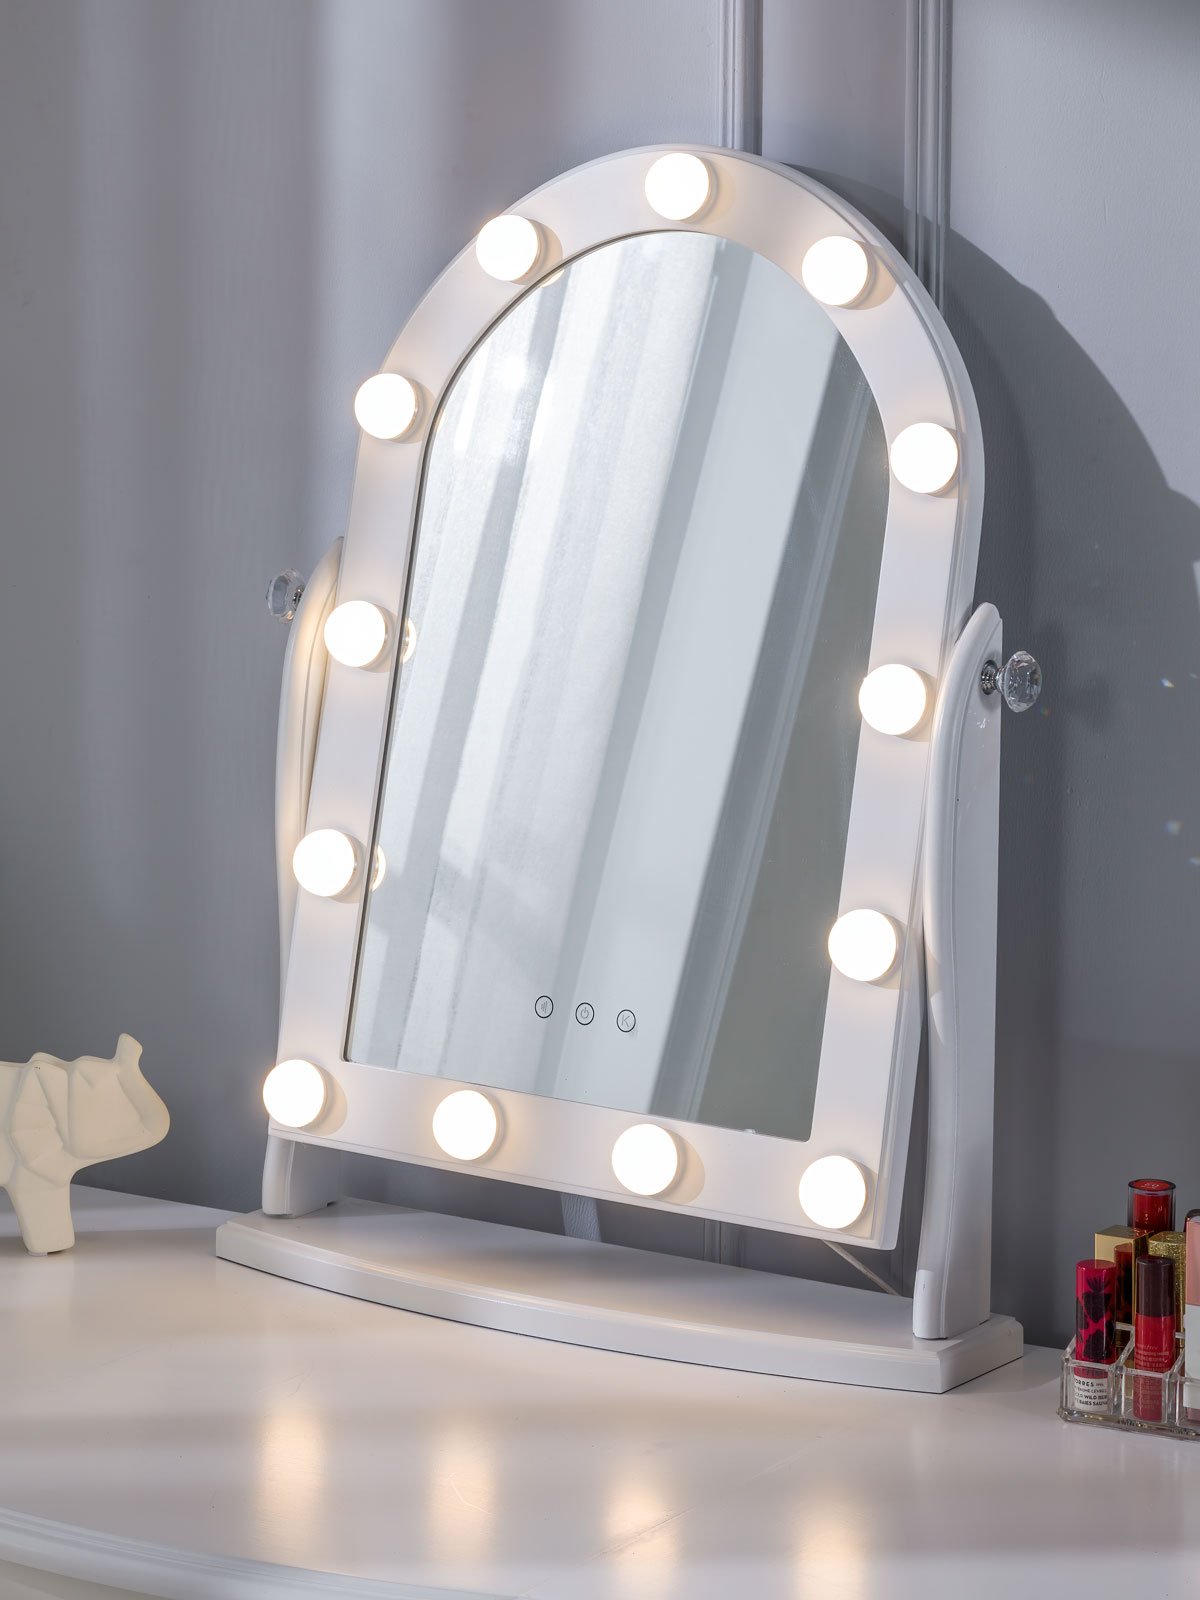 Starry 7XL Hollywood Vanity Mirror, Large Frameless LED